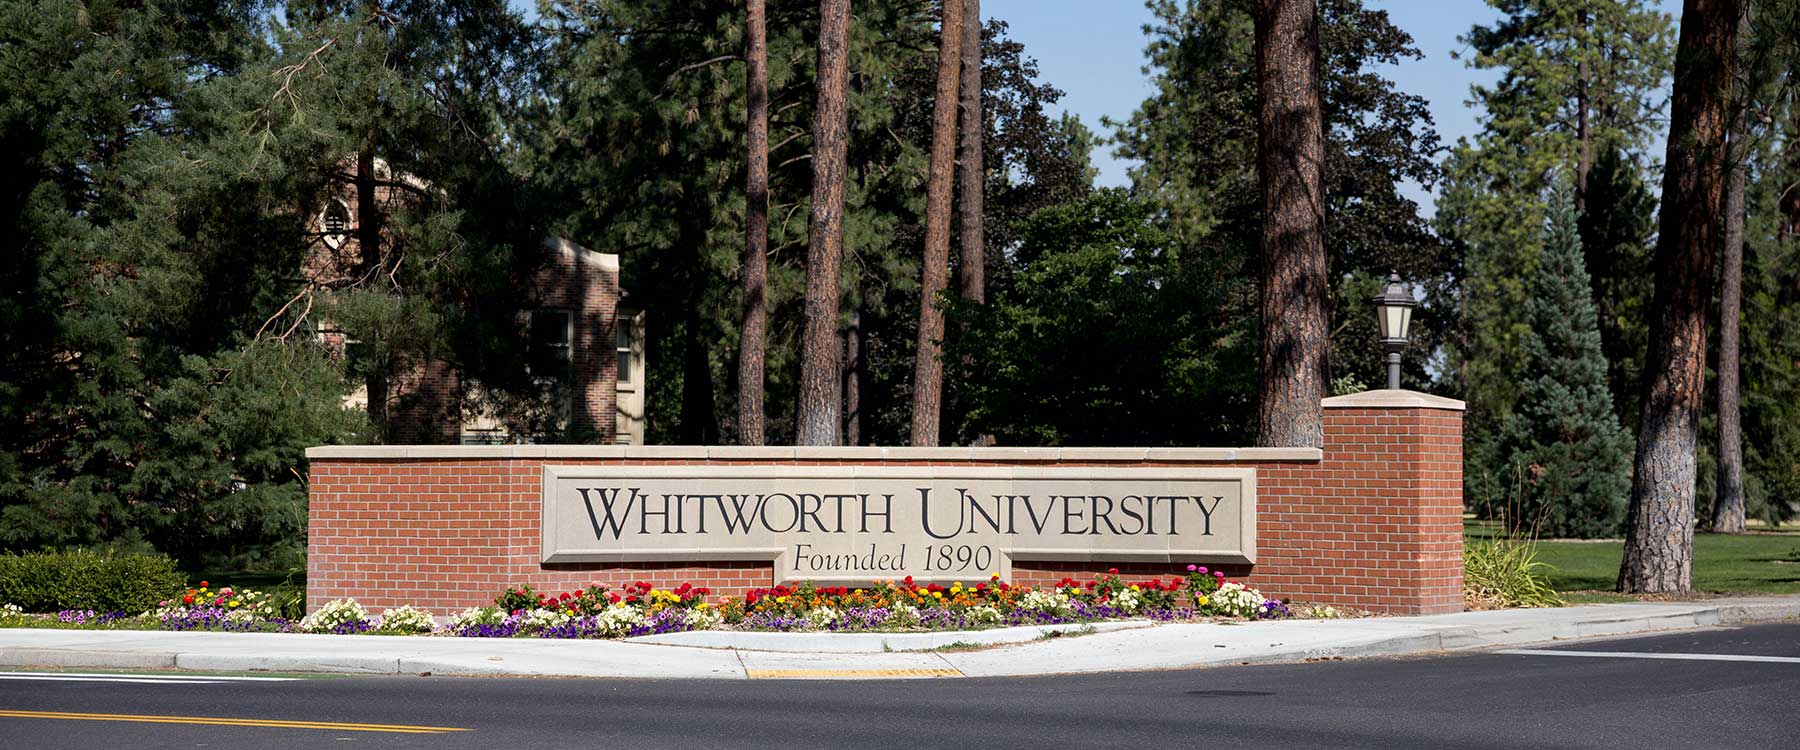 About Whitworth Whitworth University